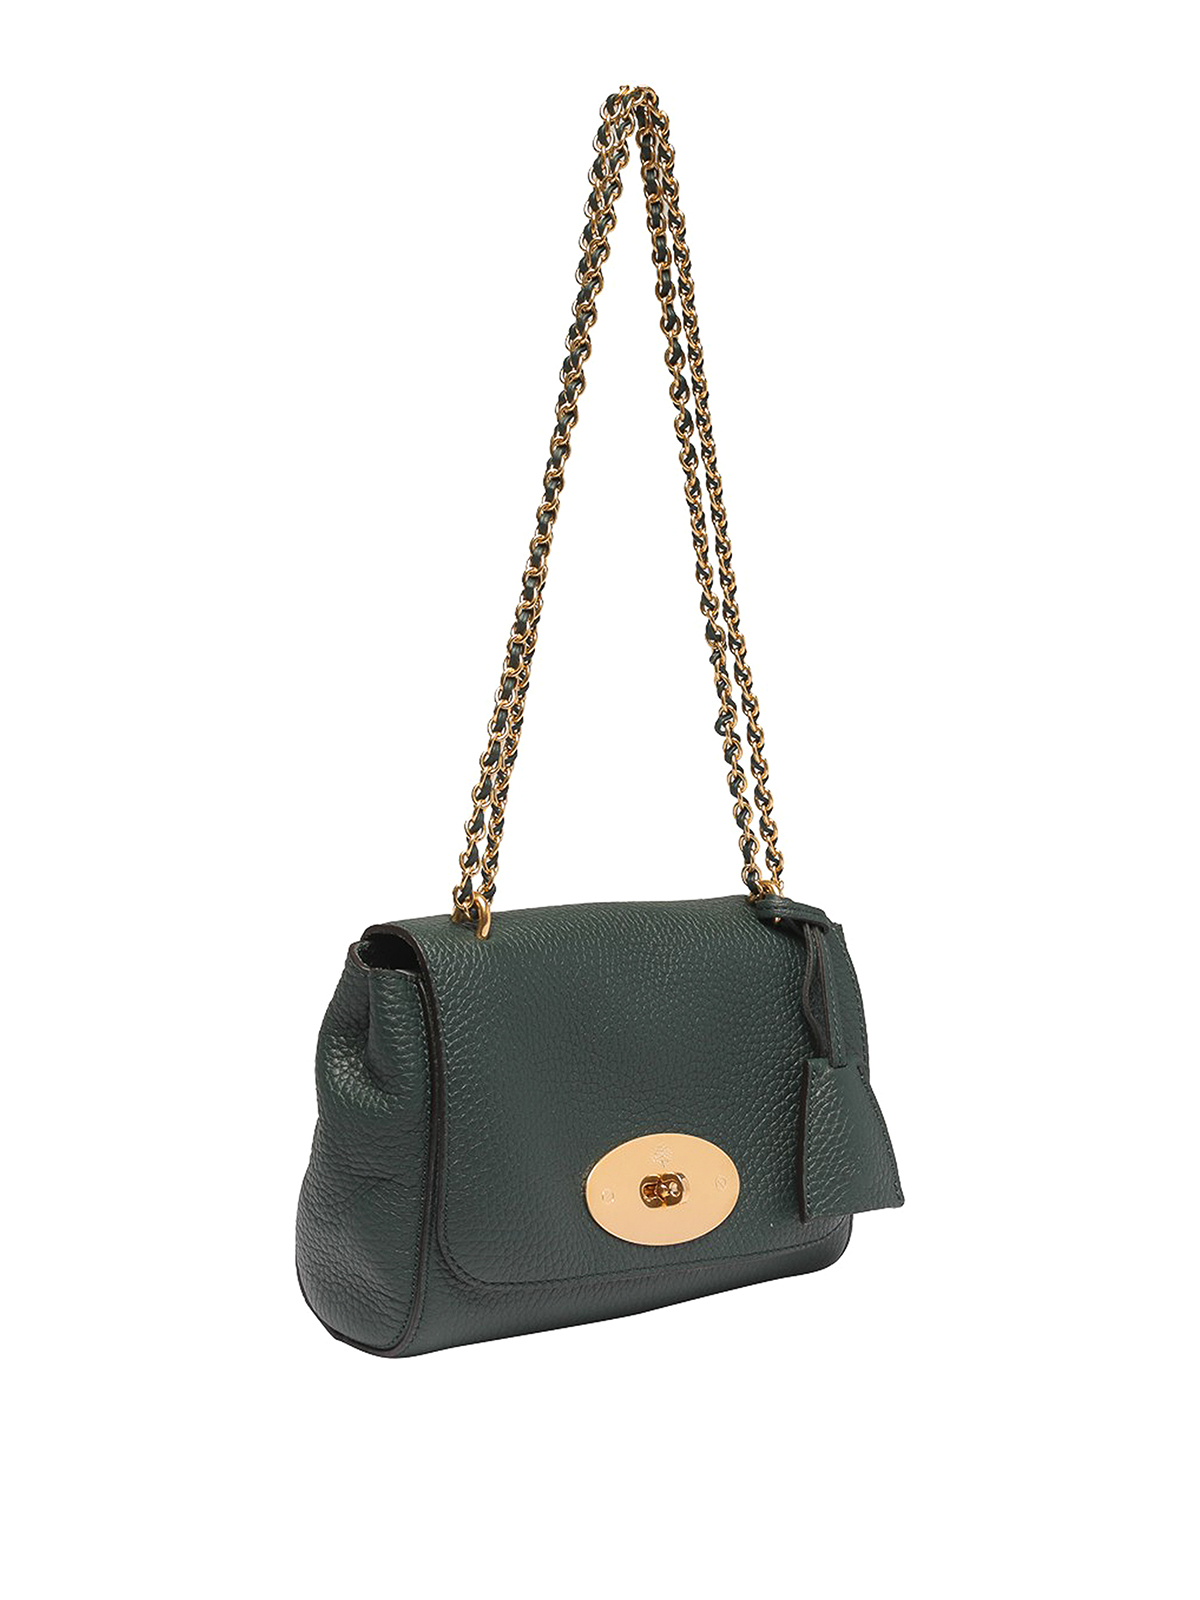 Cuore & Pelle Genuine Pebble Leather Bag, Black | eBay